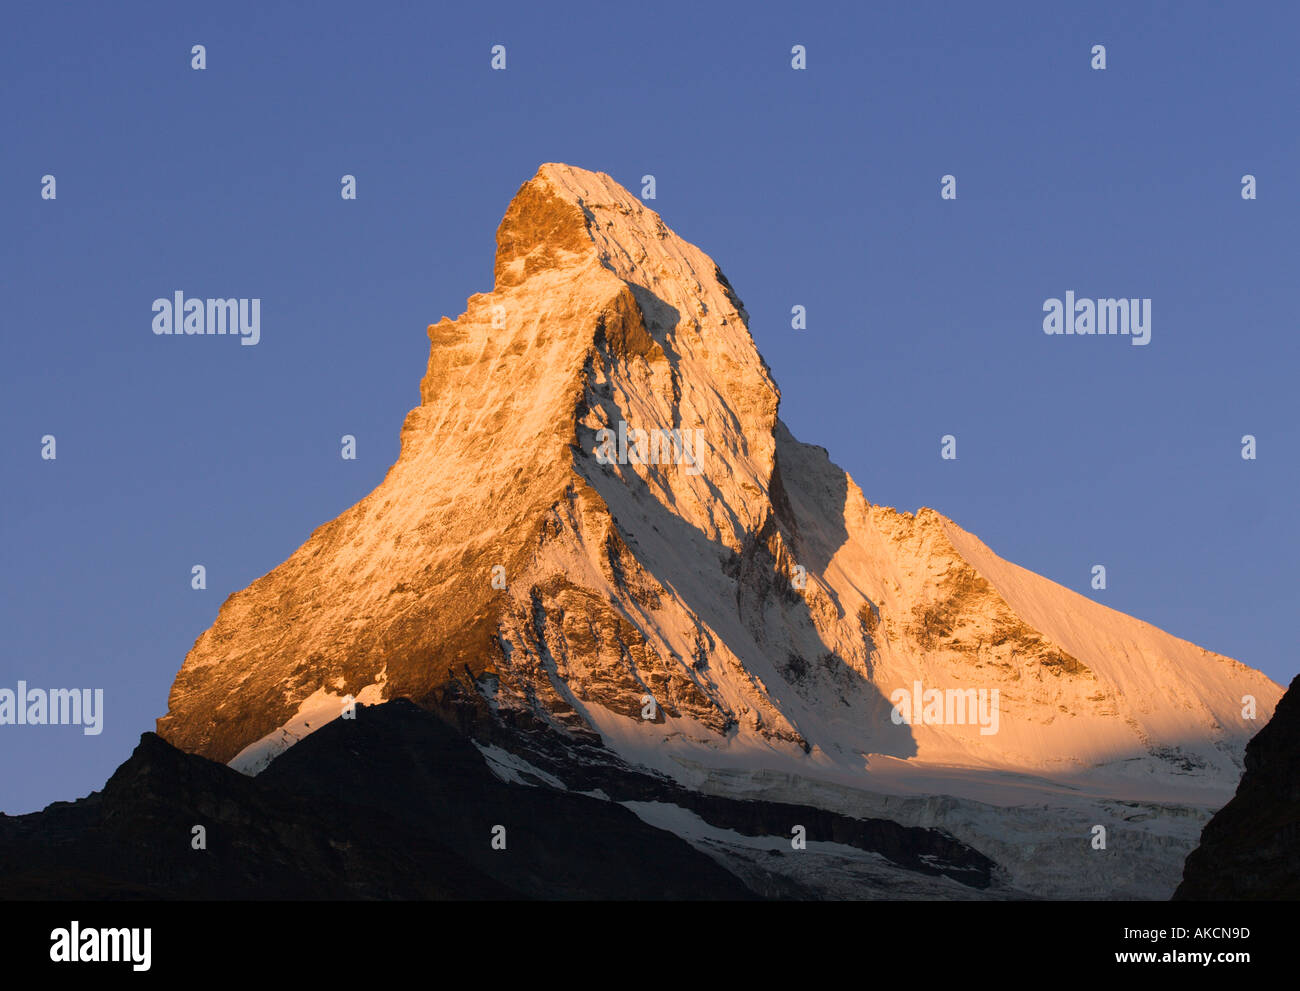 Peak of Matterhorn mountain glowing at sunrise in first light of dawn viewed from Zermatt The Swiss Alps Valais Switzerland Stock Photo